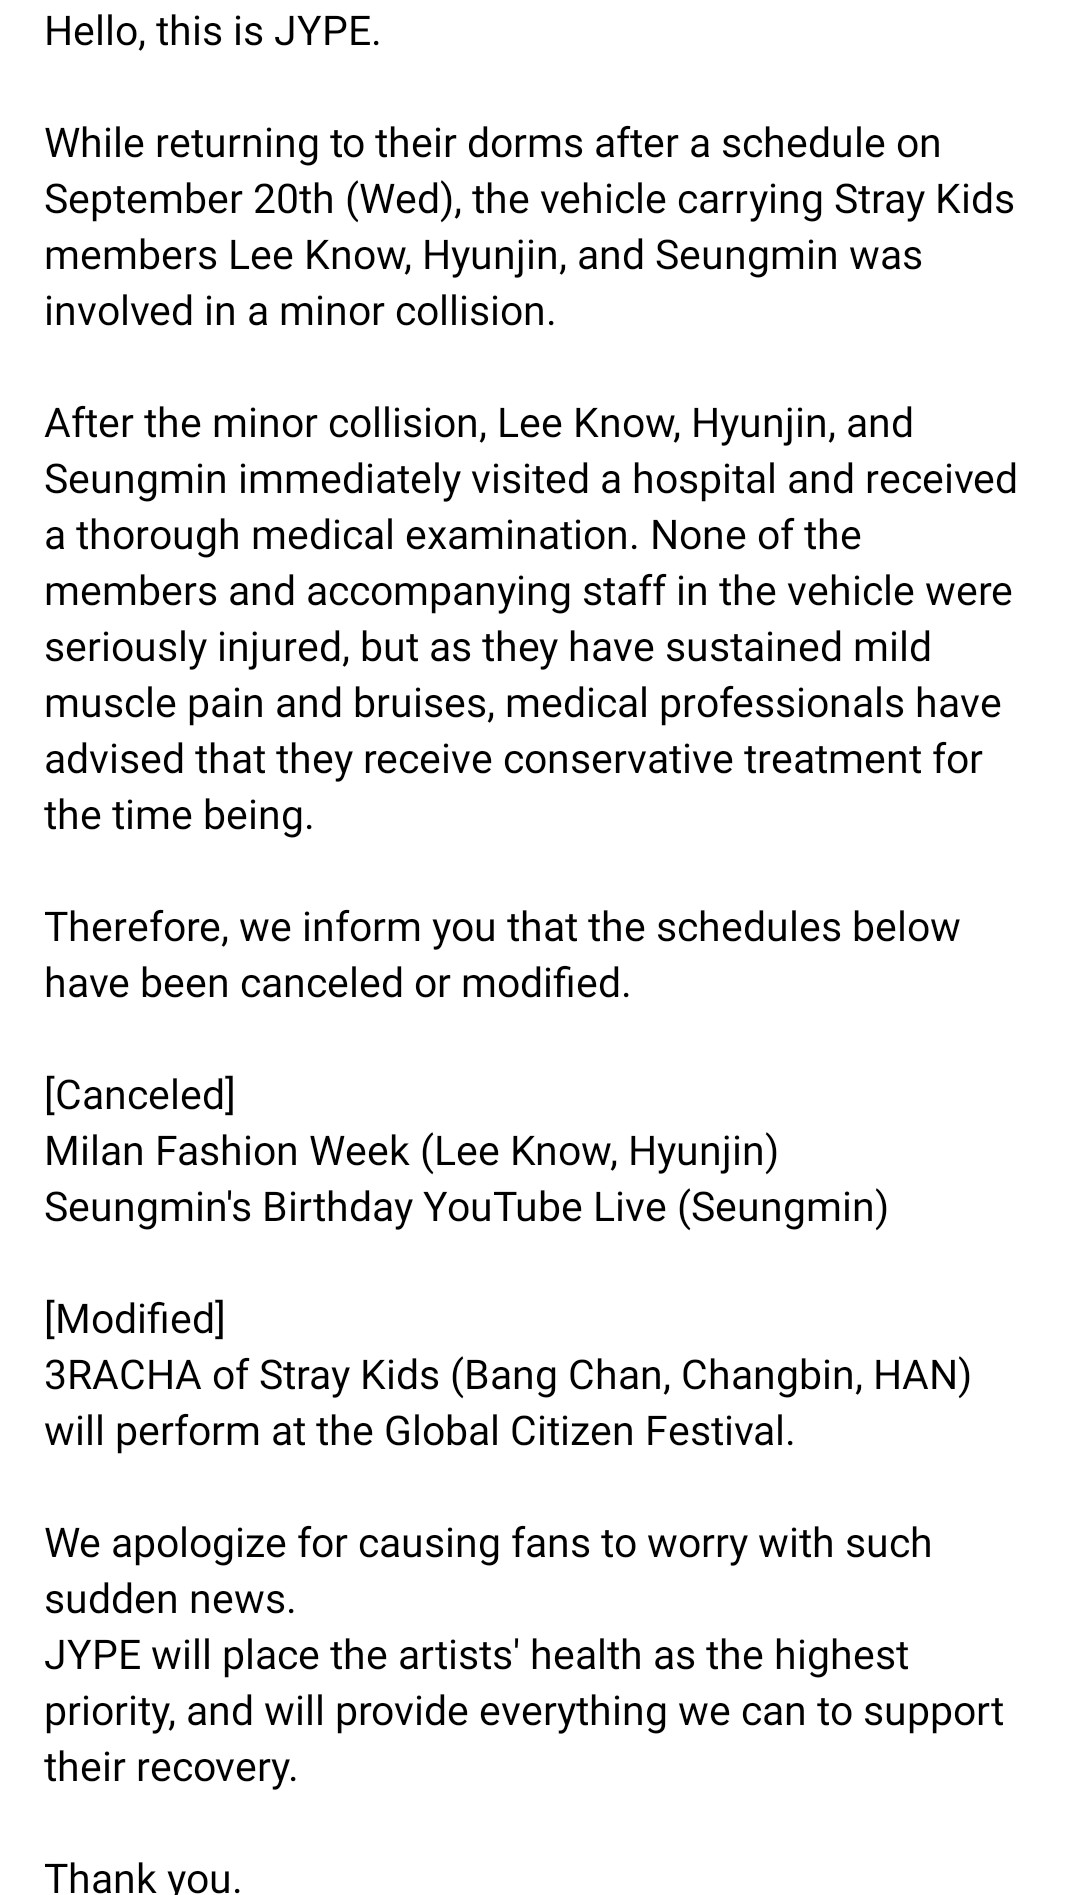 Comunicado oficial de JYP Entertainment